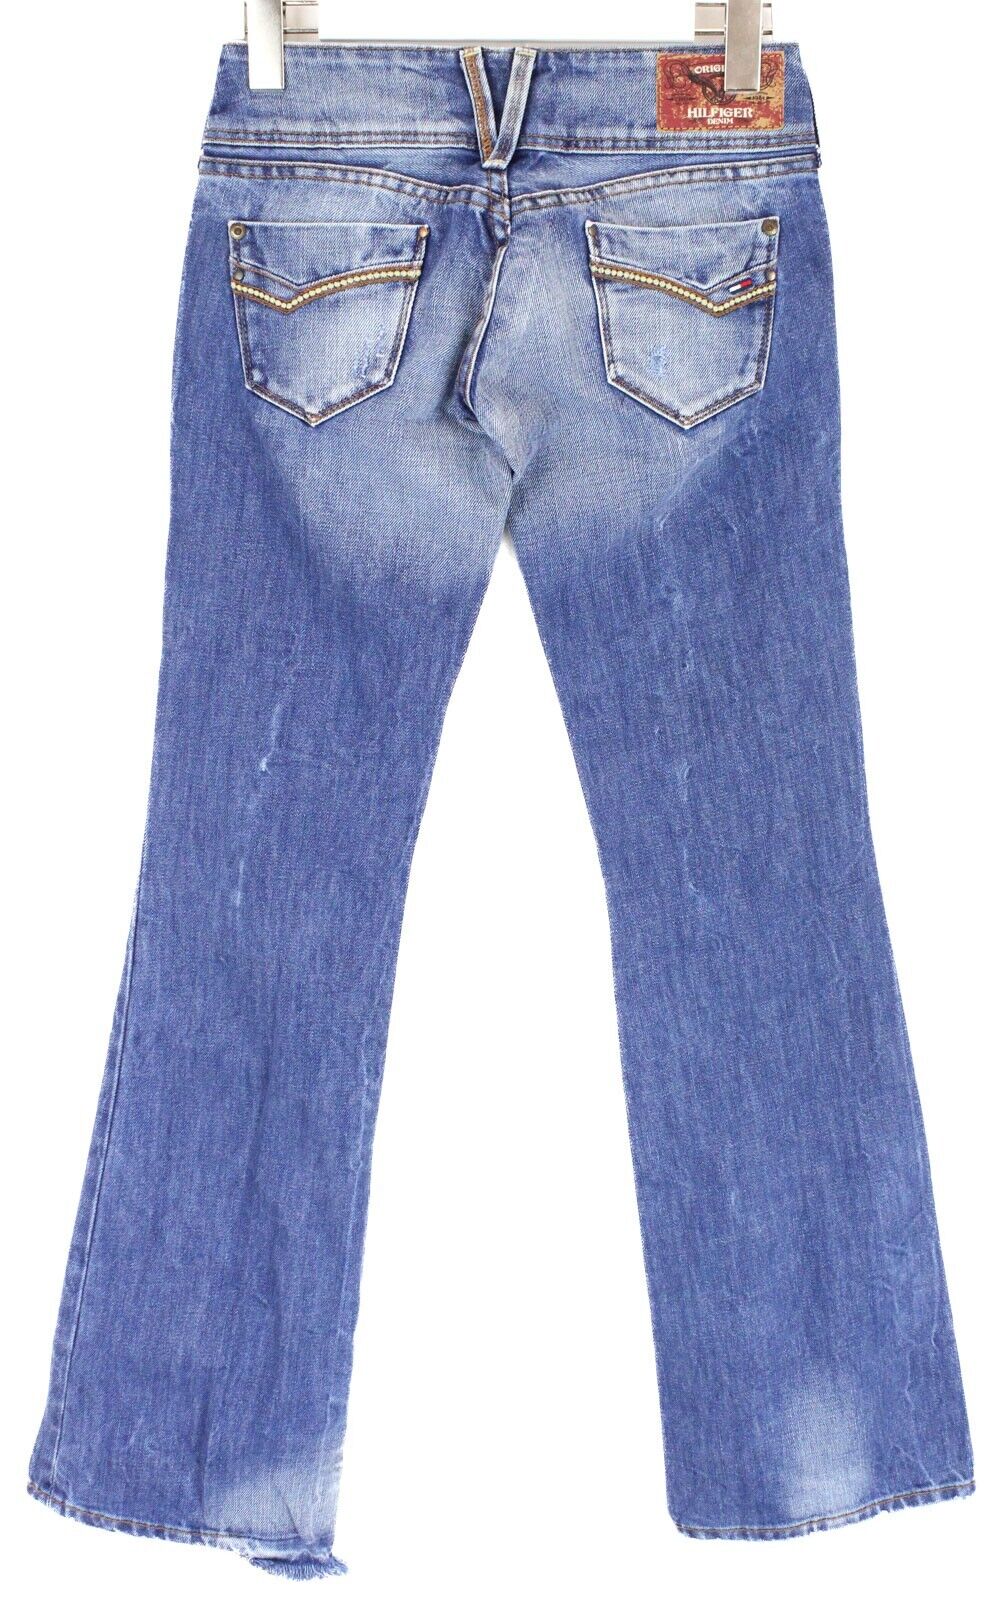 TOMMY HILFIGER Sonora Bootcut SFV San Francisco Vintage Jeans Women's  W24/L34 | eBay